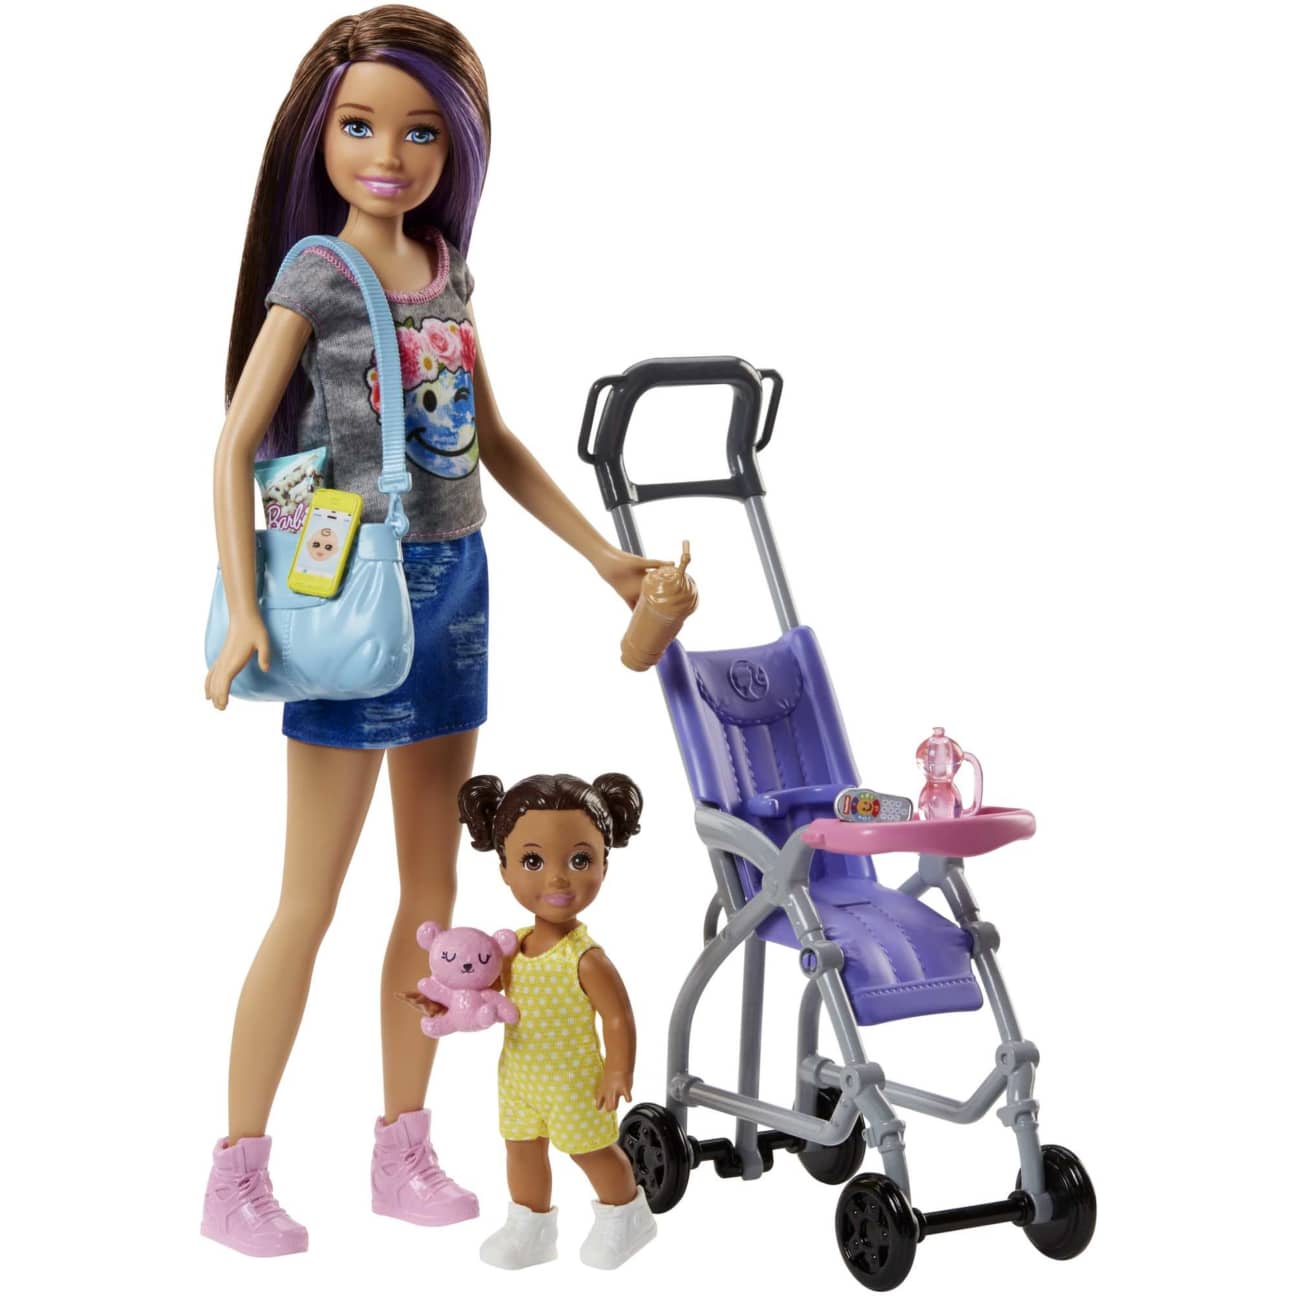 Barbie Skipper Babysitters Inc. Doll And Accessory by Mattel -Mattel - India - www.superherotoystore.com